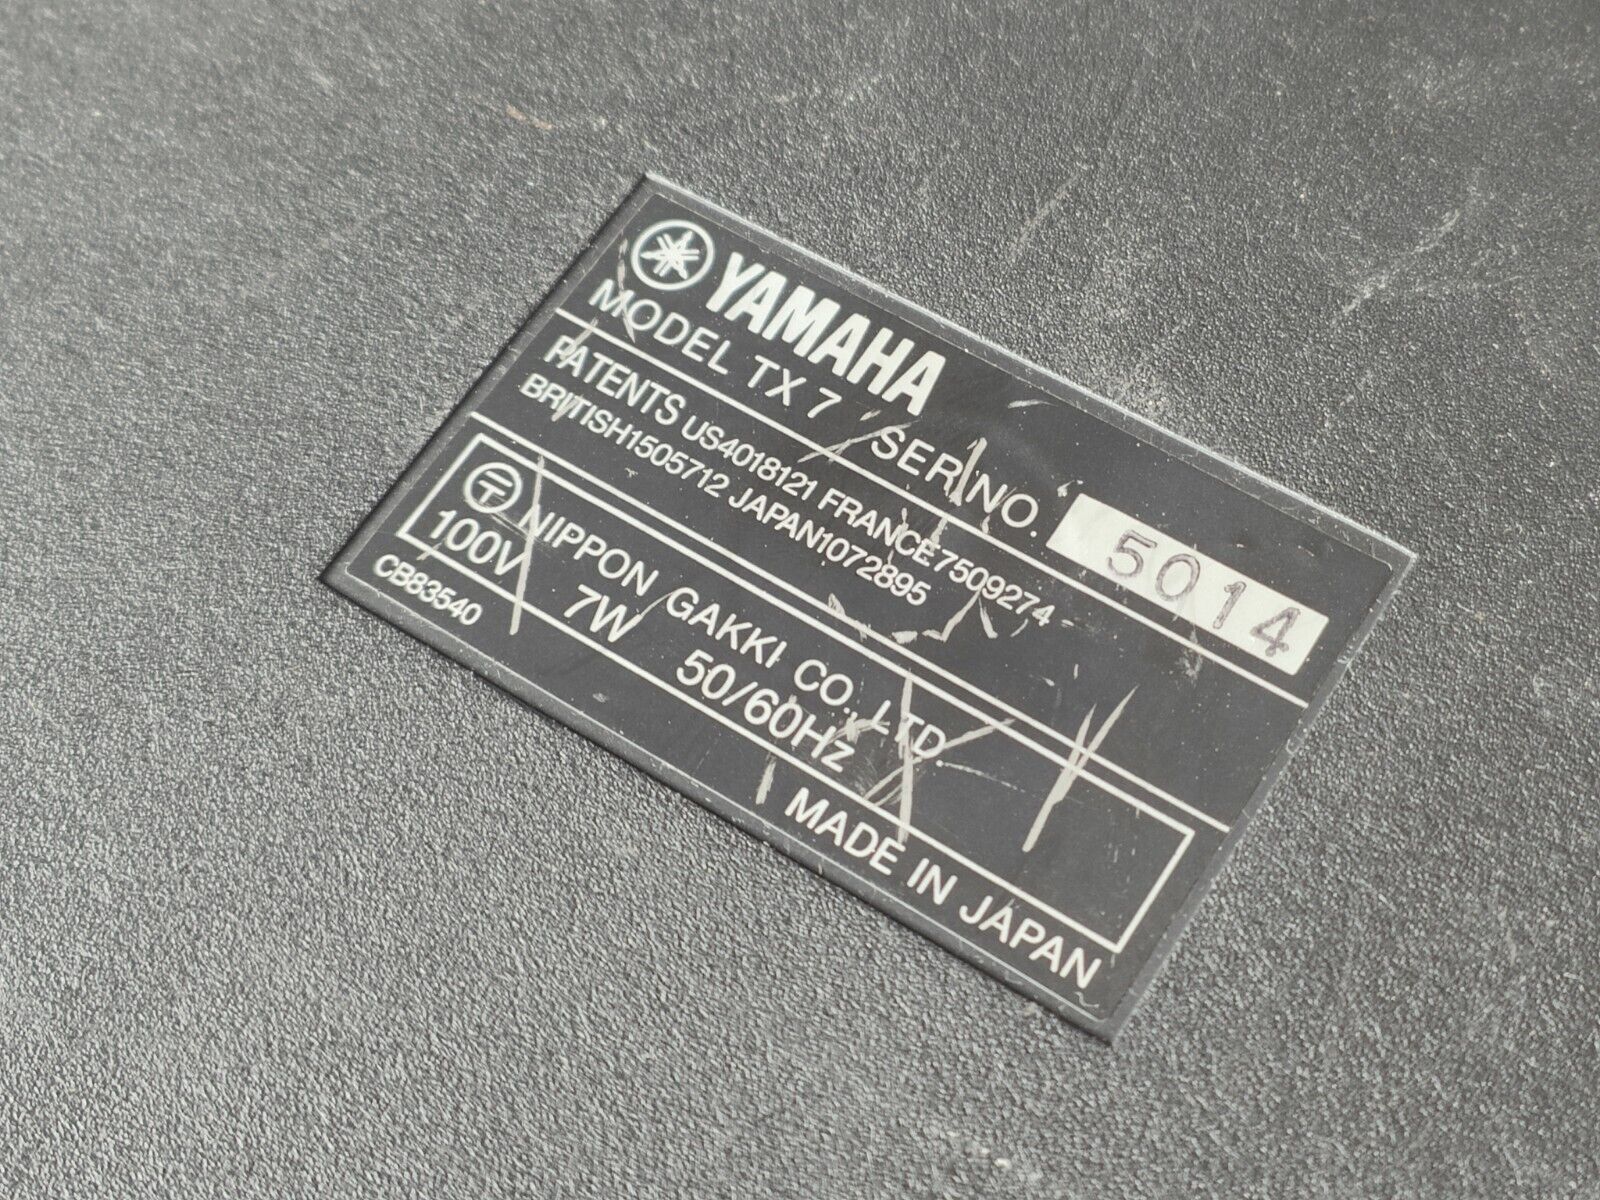 Yamaha TX7 Tone Generator Rack Unit